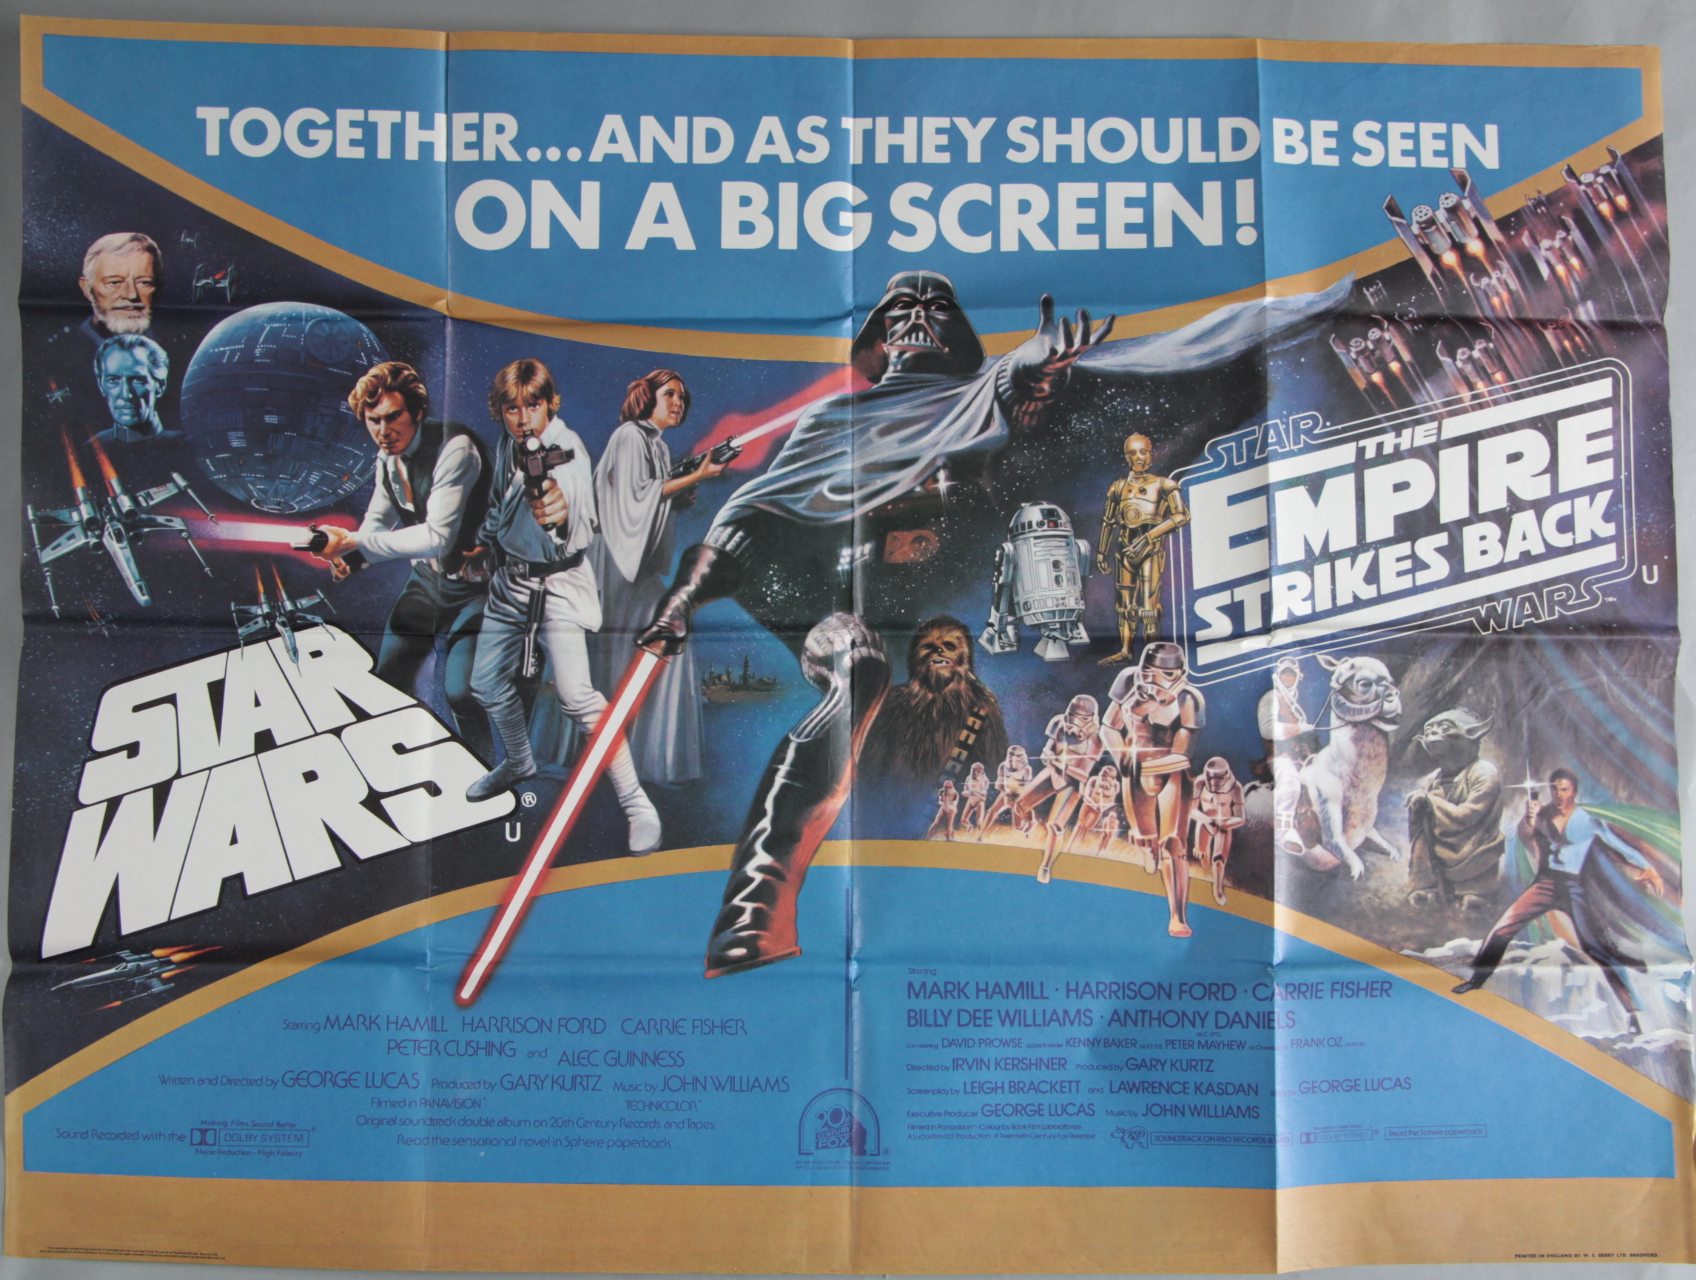 Star Wars / The Empire Strikes Back UK double-bill film poster picturing Darth Vader, Luke